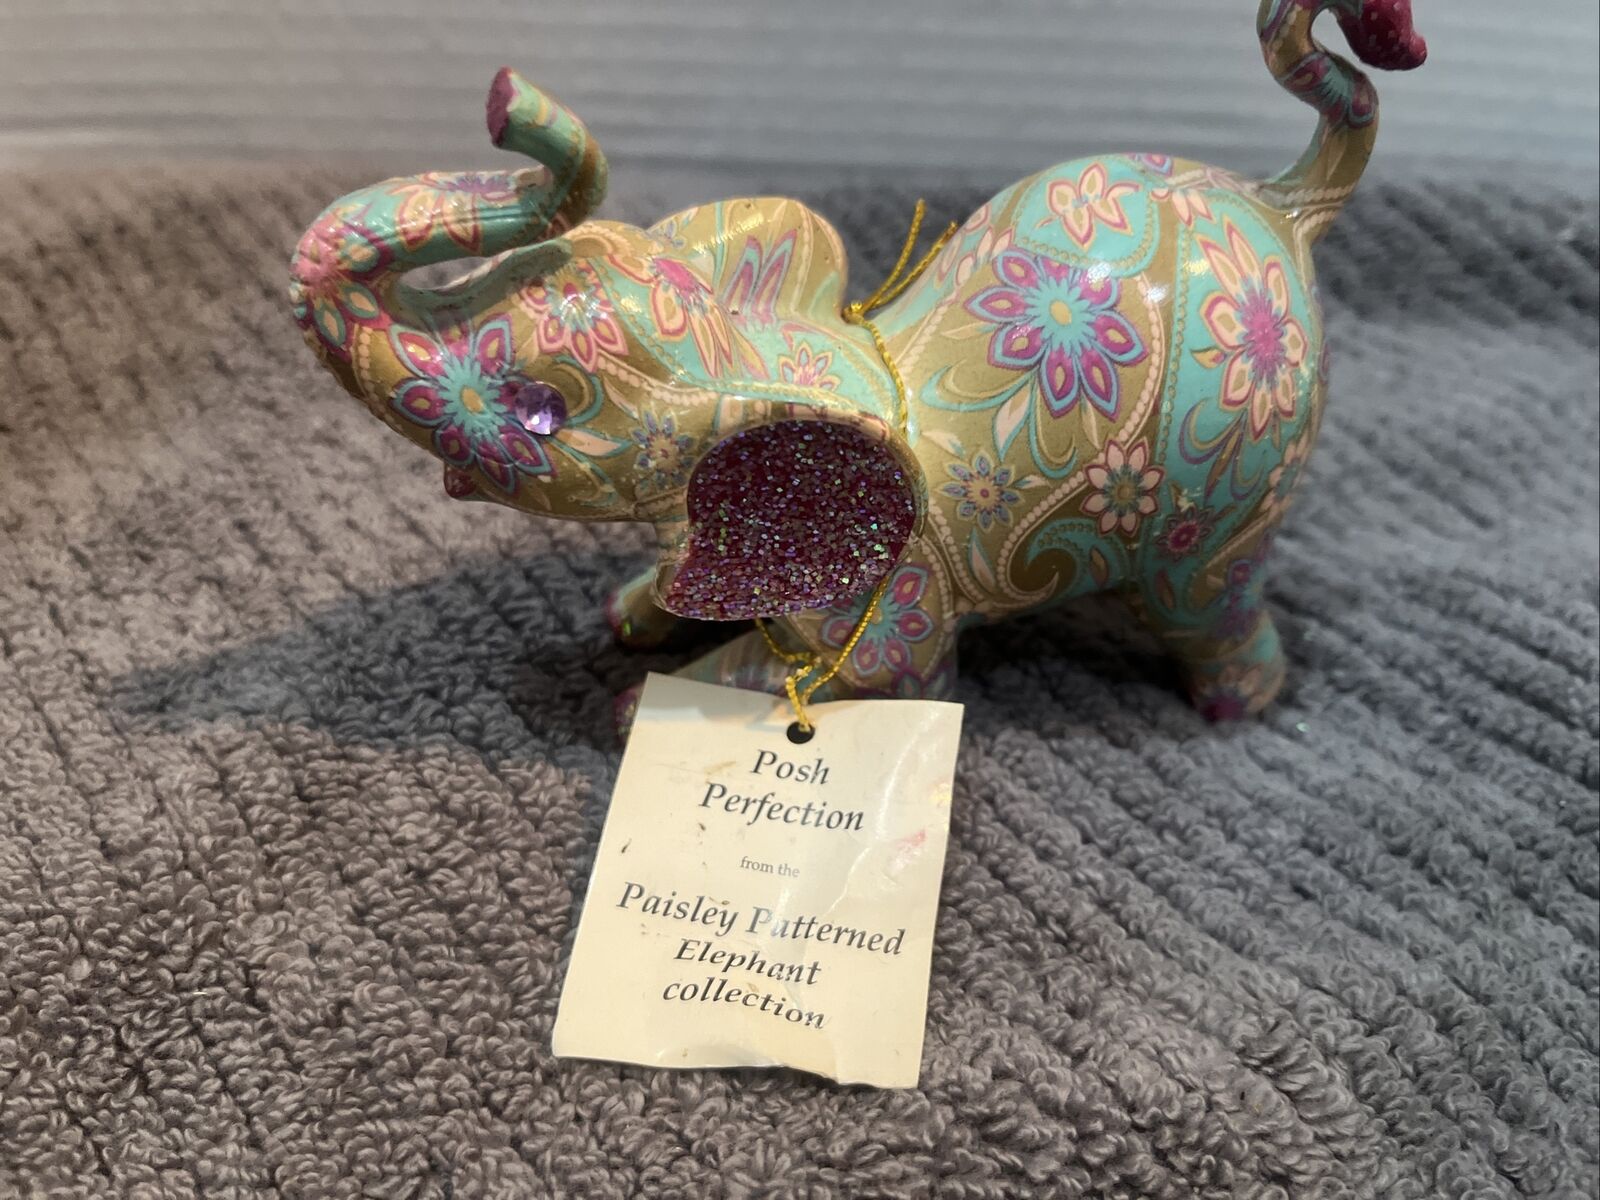 2015 Hamilton Collection Posh Perfection Elephant Collection Figurine 